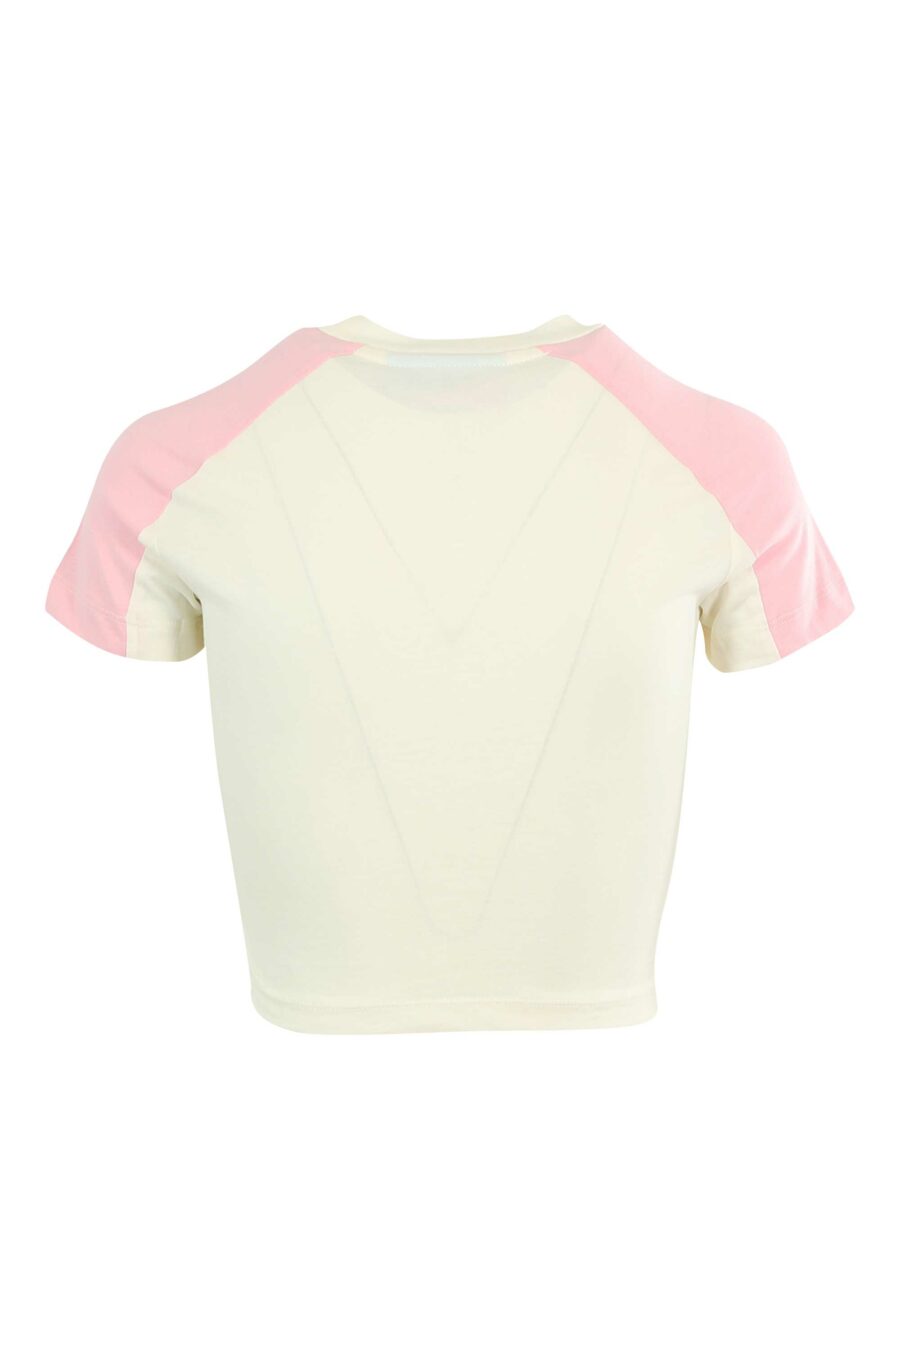 T-shirt blanc avec minilogue rose "ferragni" - 8052672415974 2